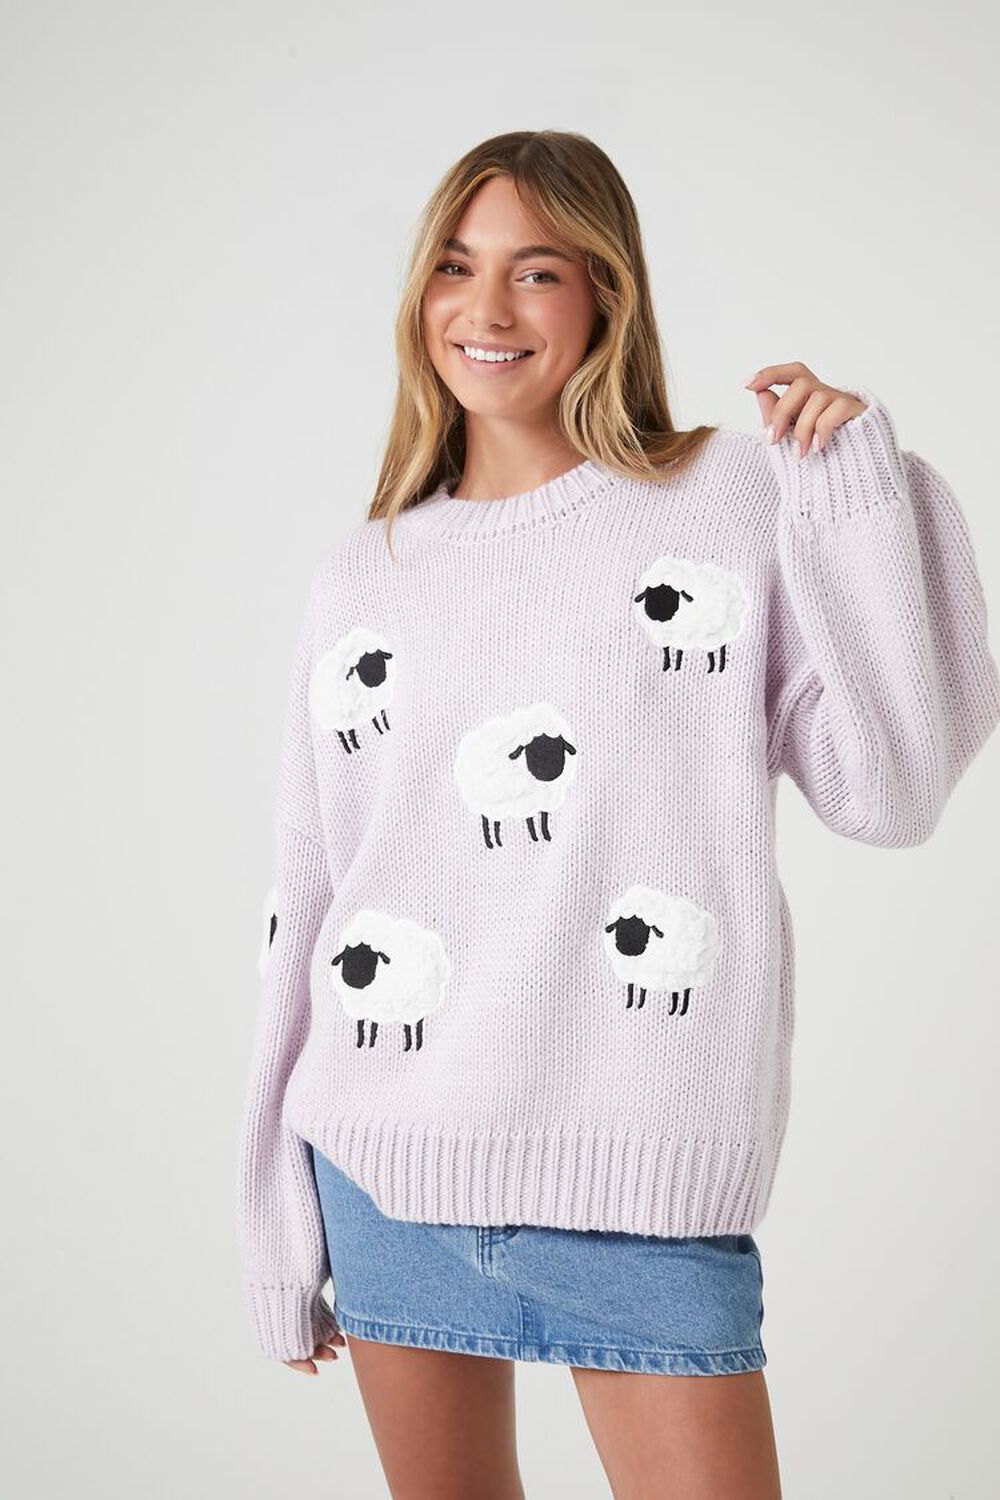 LAVENDER Sheep Drop-Sleeve Sweater, image 1